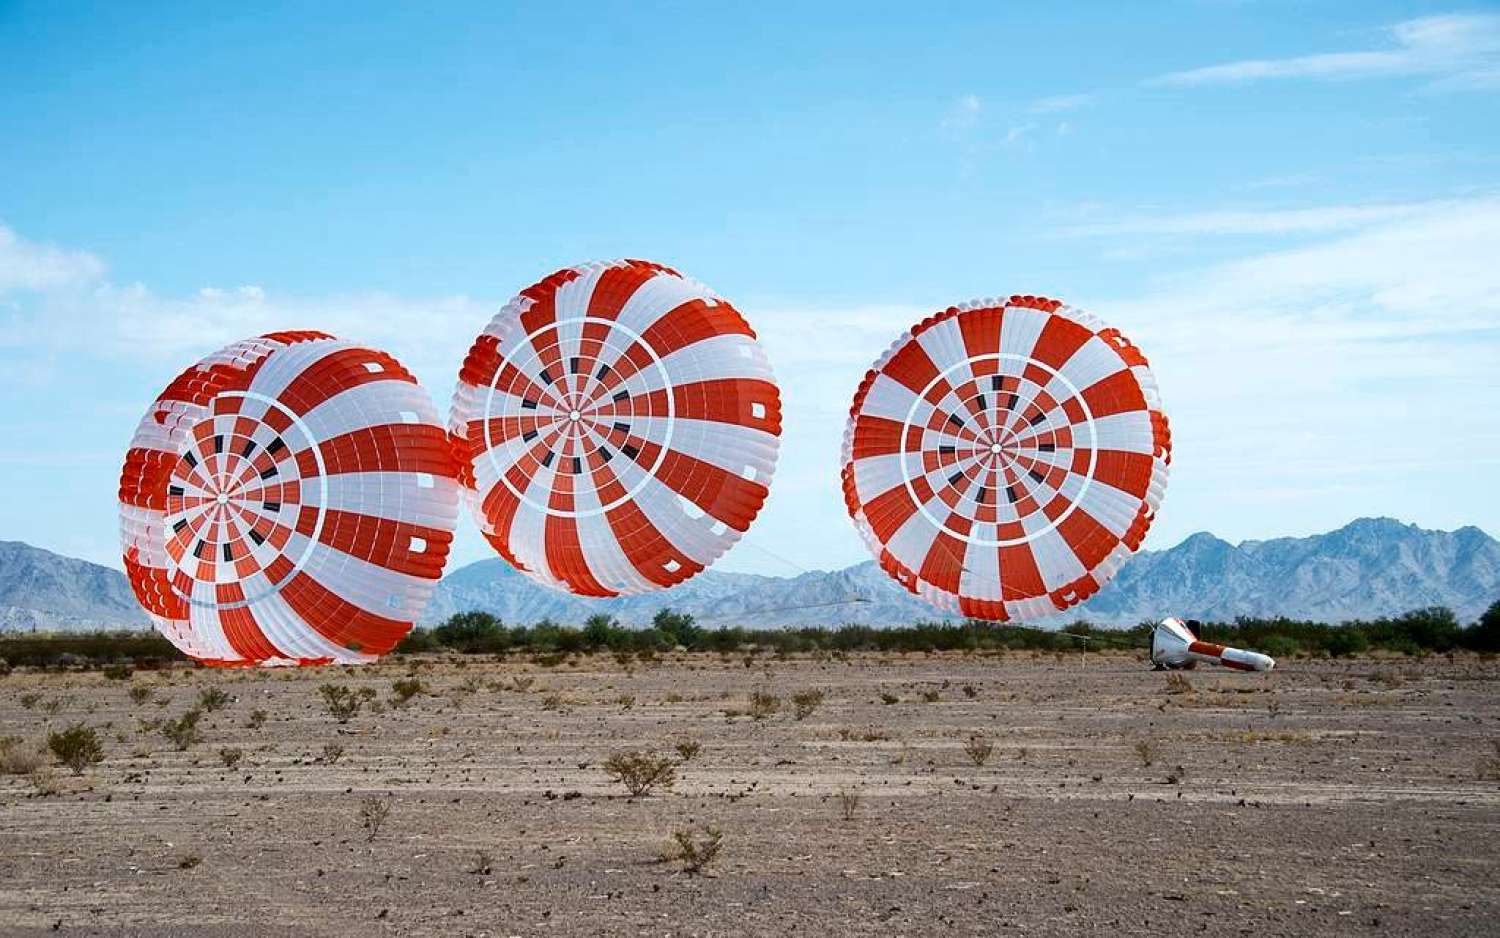 Quanto è complicato costruire un semplice paracadute? – ΛD SIDΣRΛ